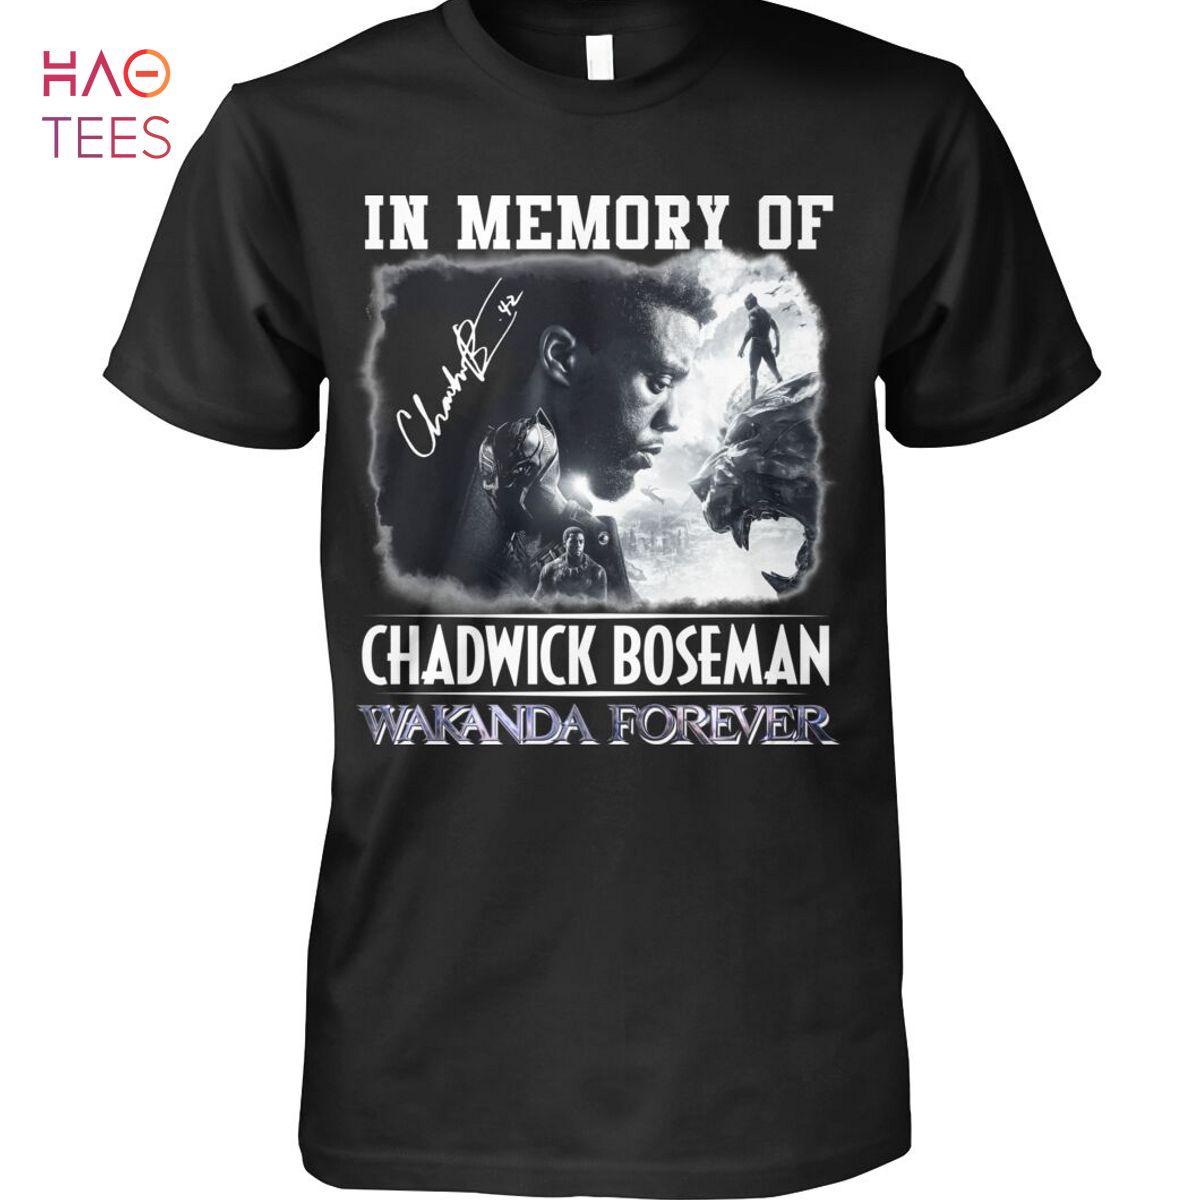 In Memory Of Chadwick Boseman Shirt